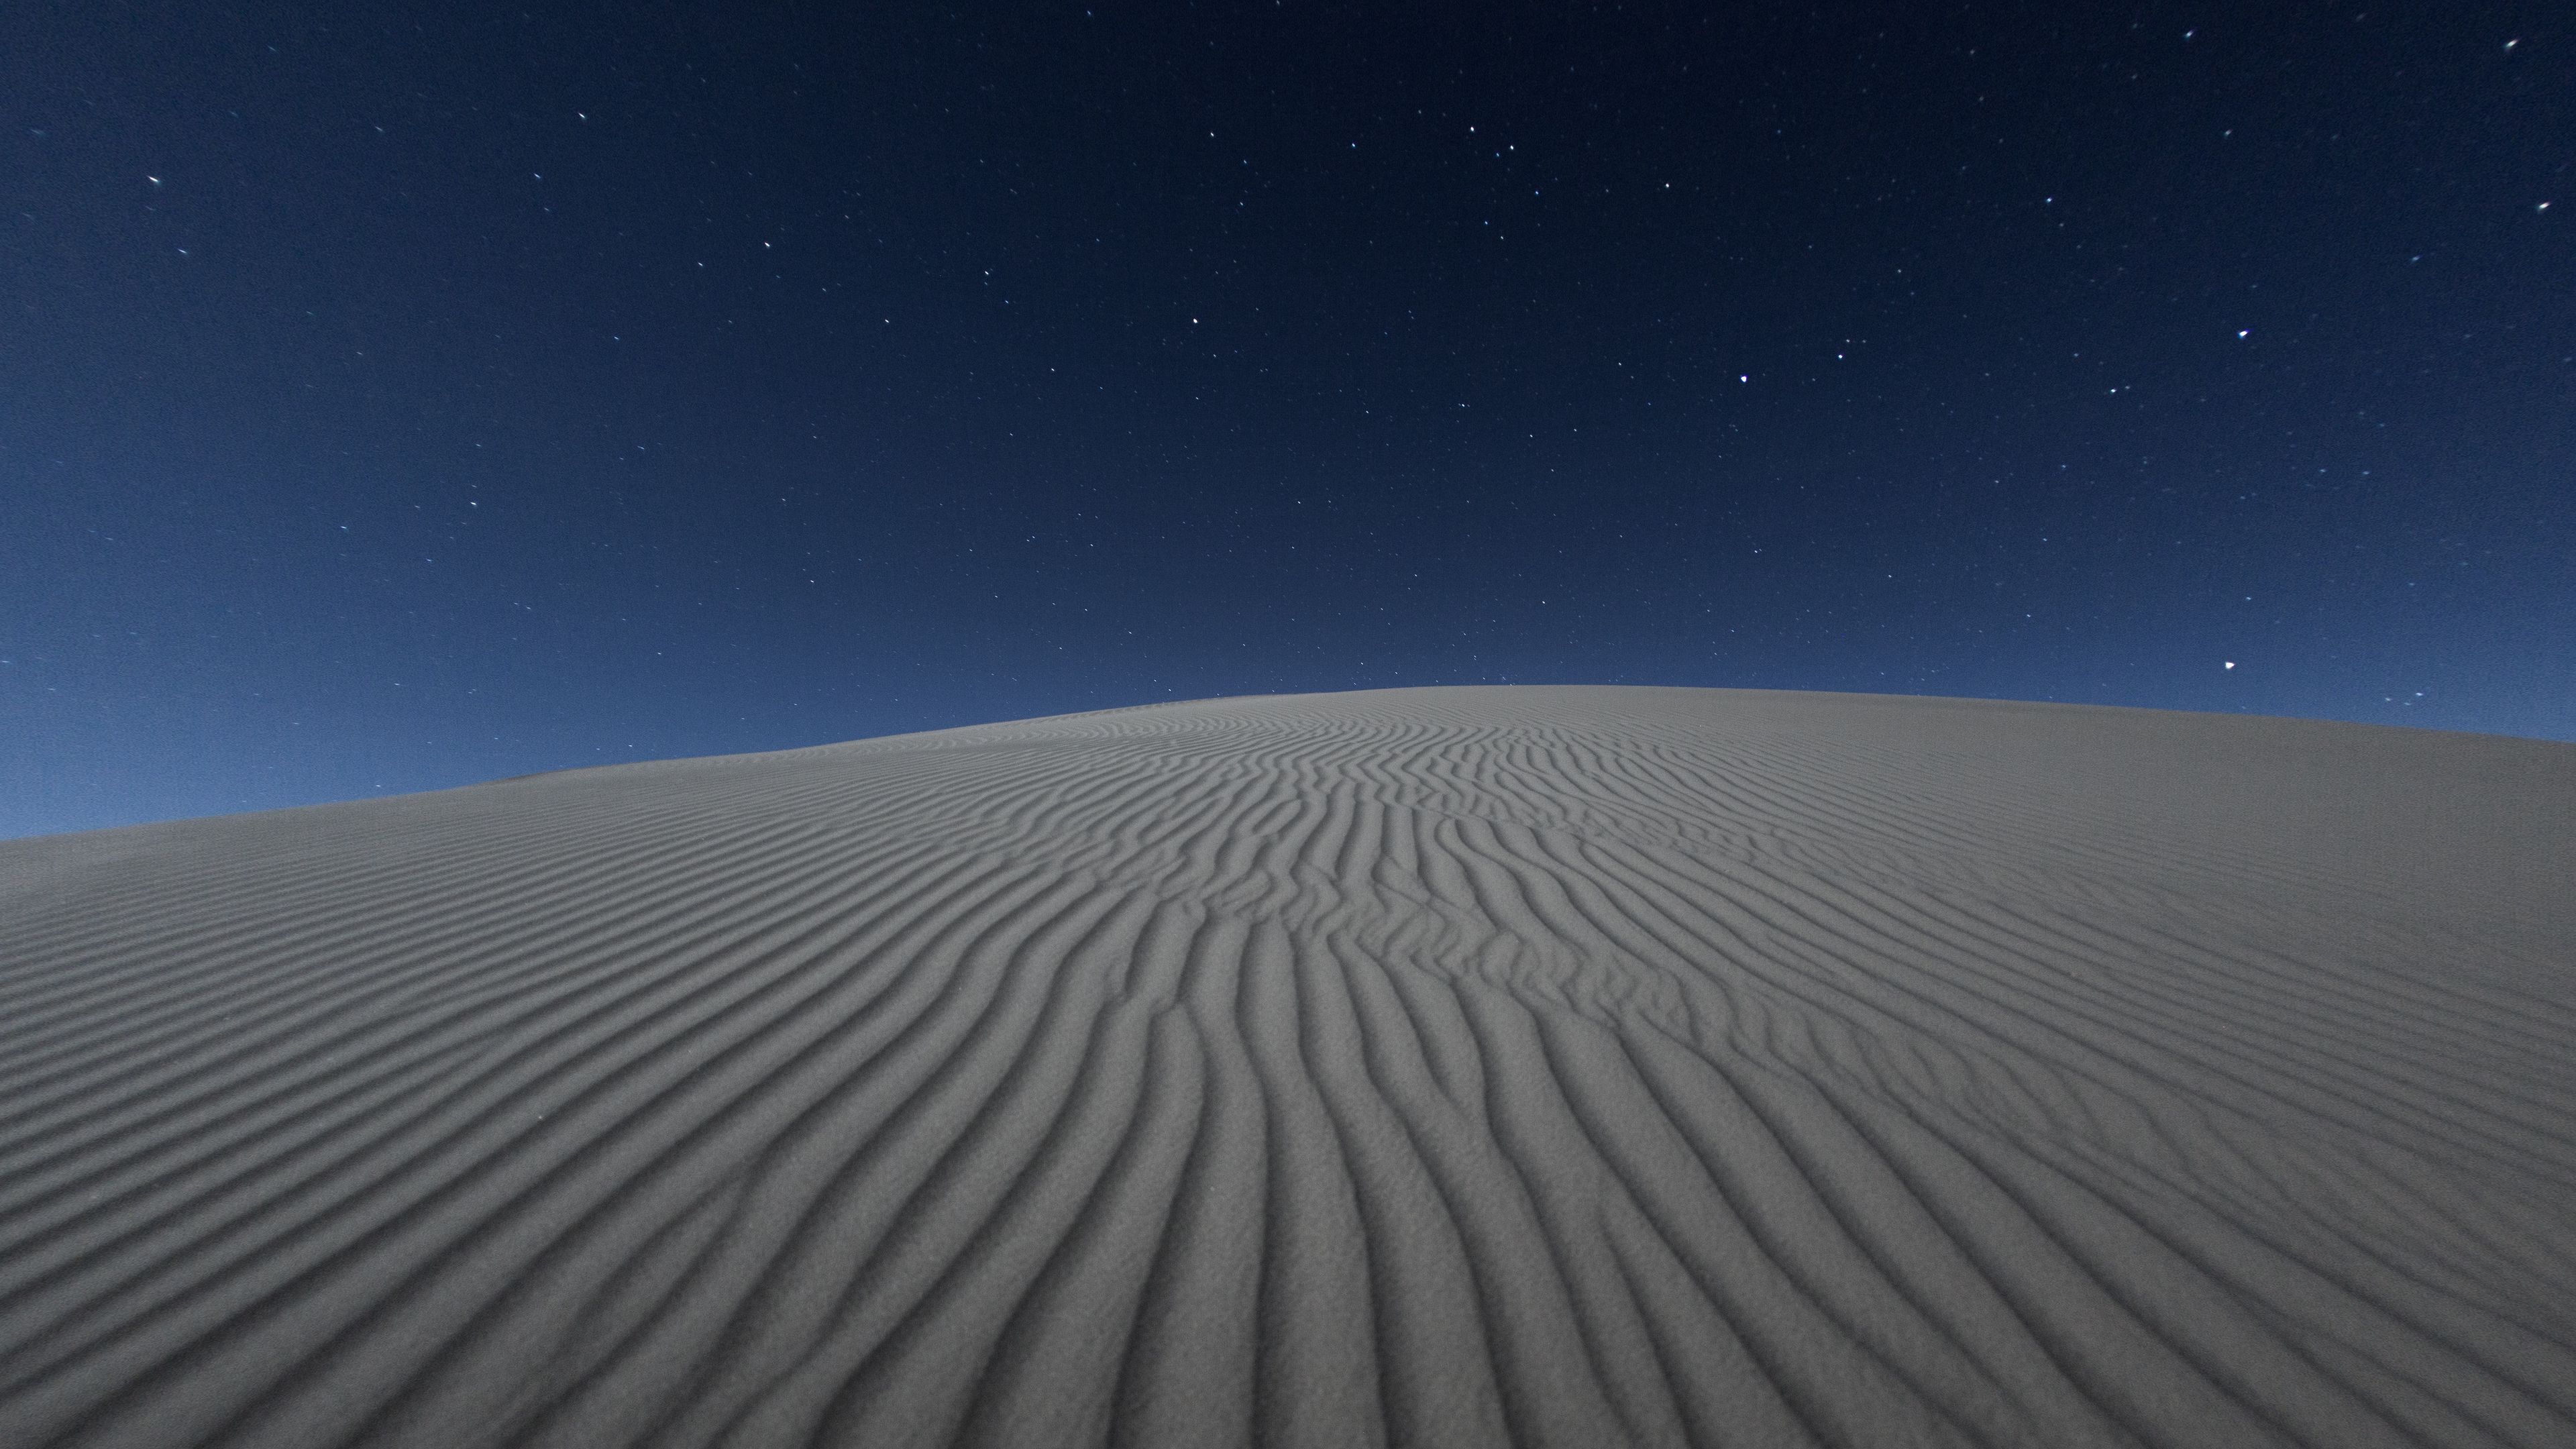 Download wallpaper 3840x2160 desert, sand, night, starry sky, light, wavy 4k  uhd 16:9 hd background